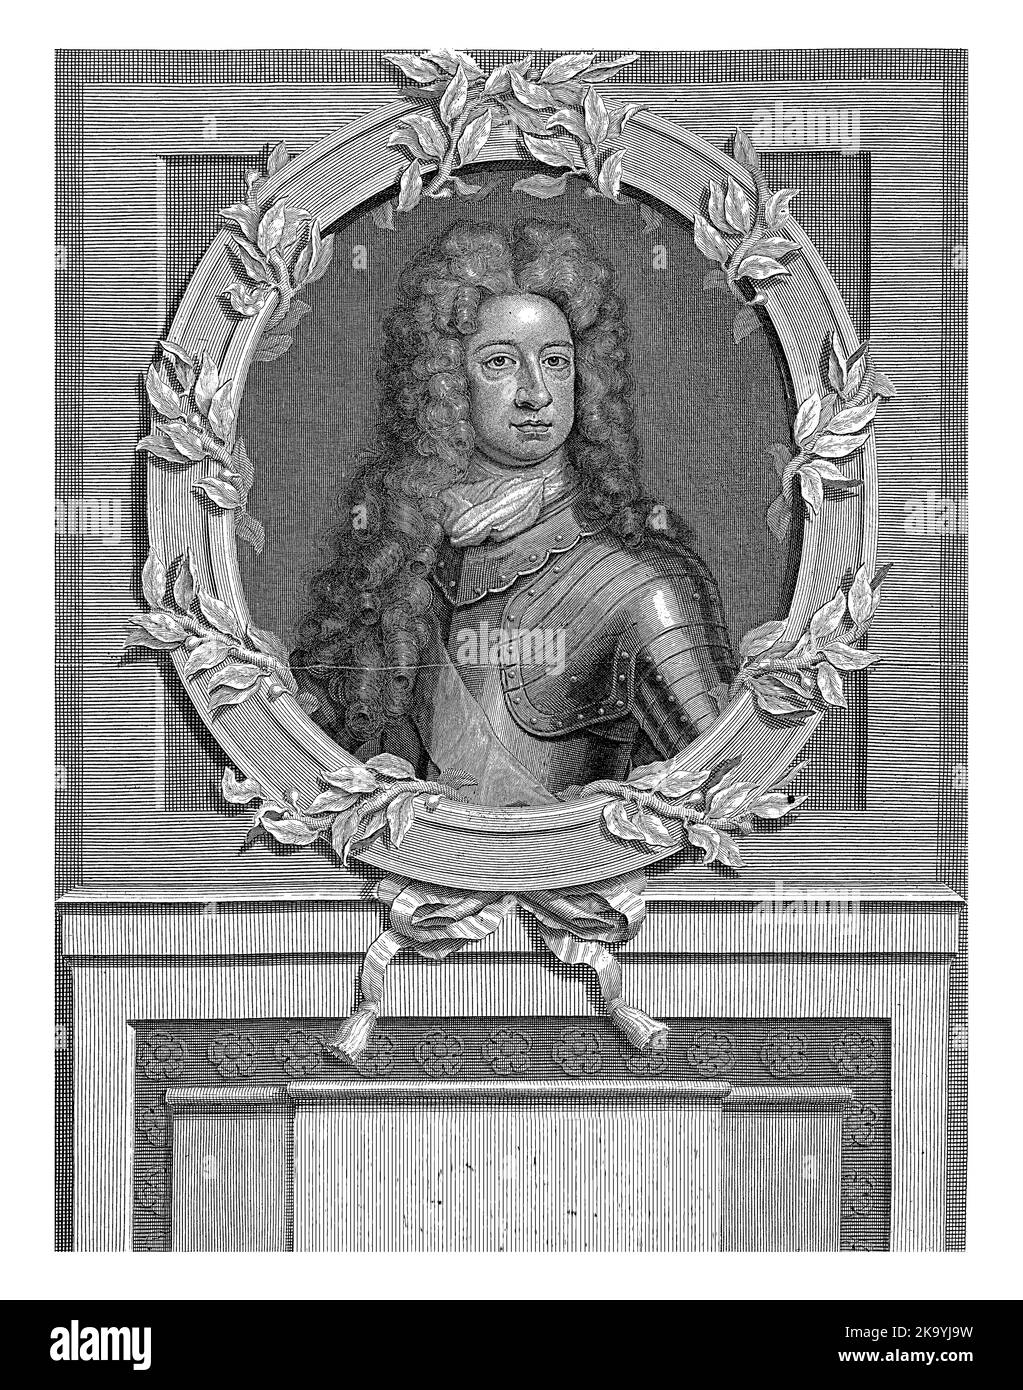 Retrato de Jorge I de Gran Bretaña, Felipe de Gracia, 1714 - 1732 Jorge I de Hanóver, rey de Gran Bretaña. Foto de stock